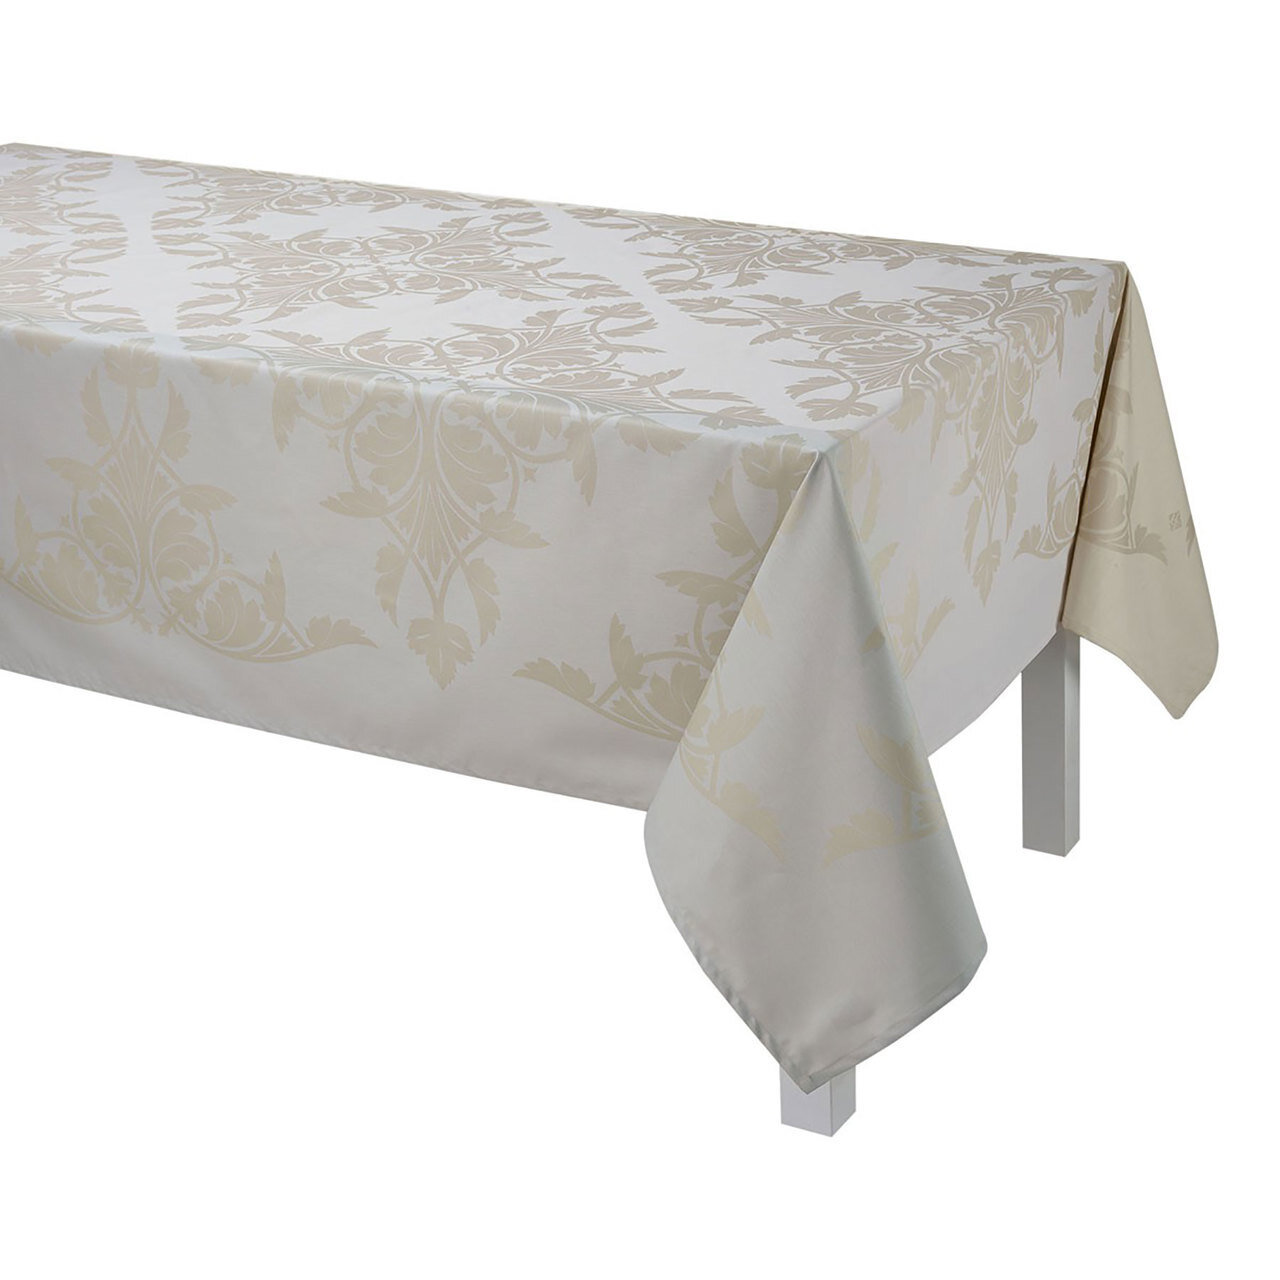 Le Jacquard Syracuse Beige Tablecloth 59x102